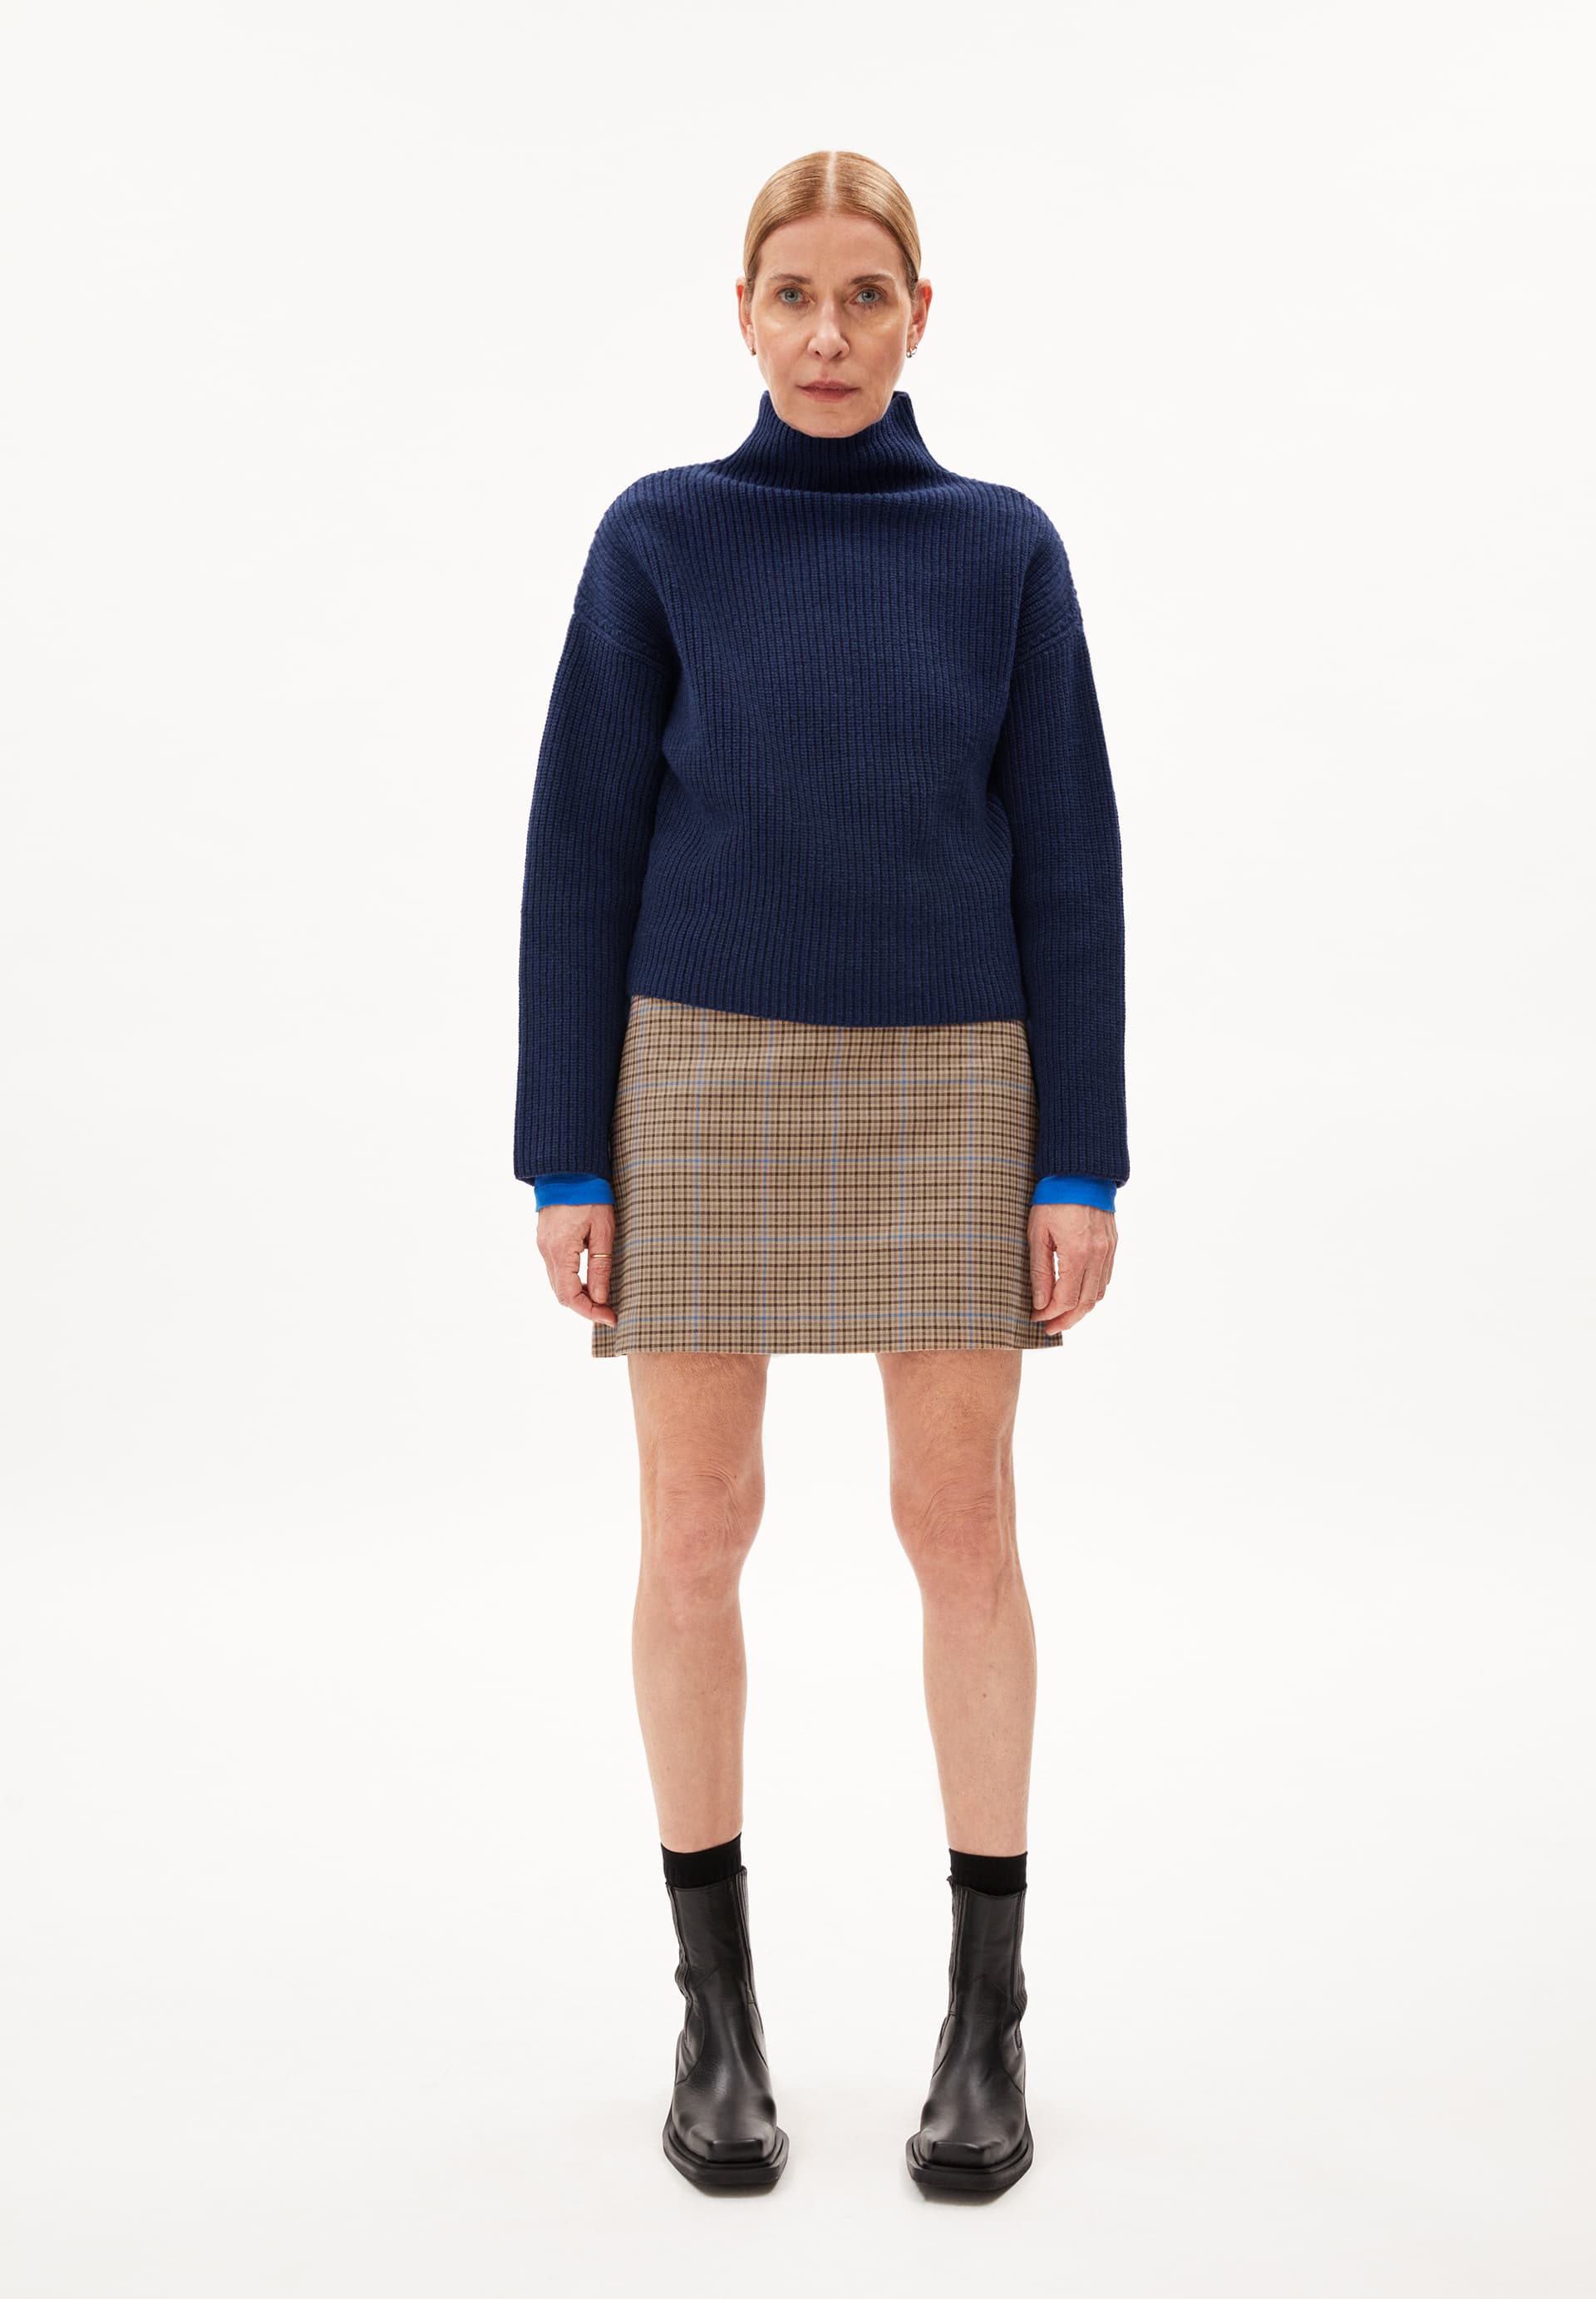 ZAALA PATTERN Woven Skirt Regular Fit made of Organic Cotton Mix